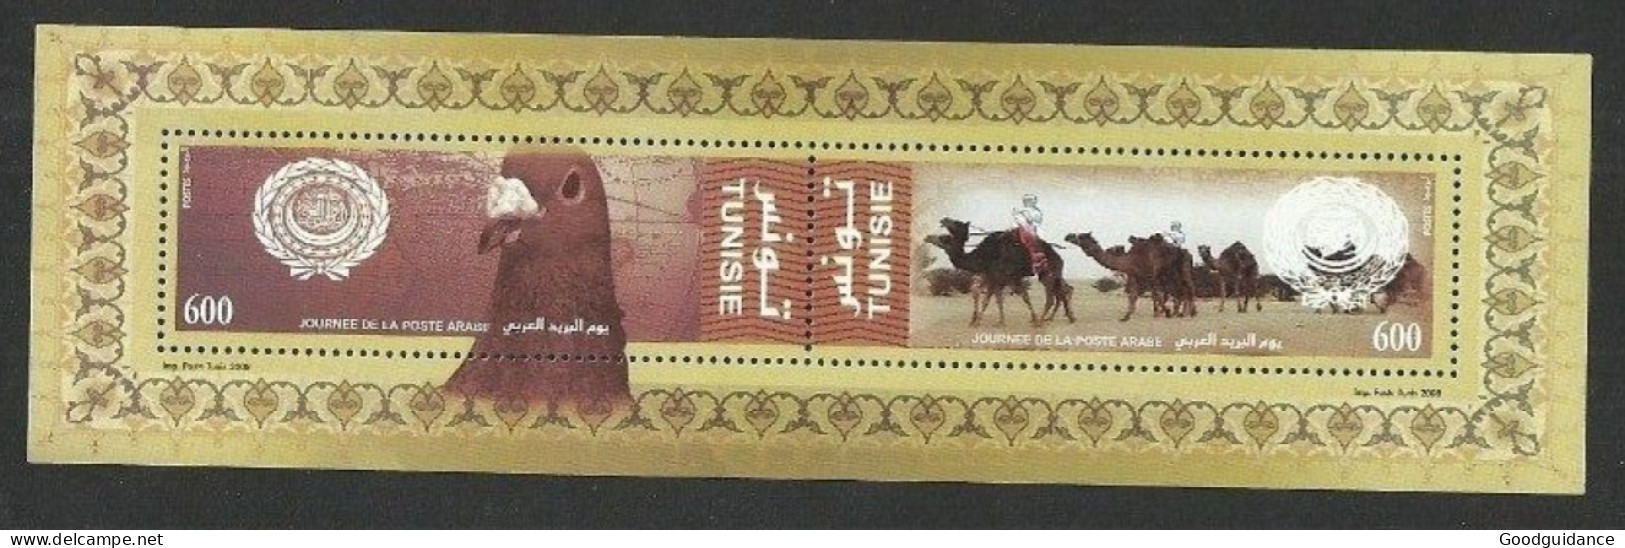 2008- Tunisia-  Minisheet  - Arab Post Day 2008 - Joint Issue - Bird - Camel - Desert - MNH** - Jordania